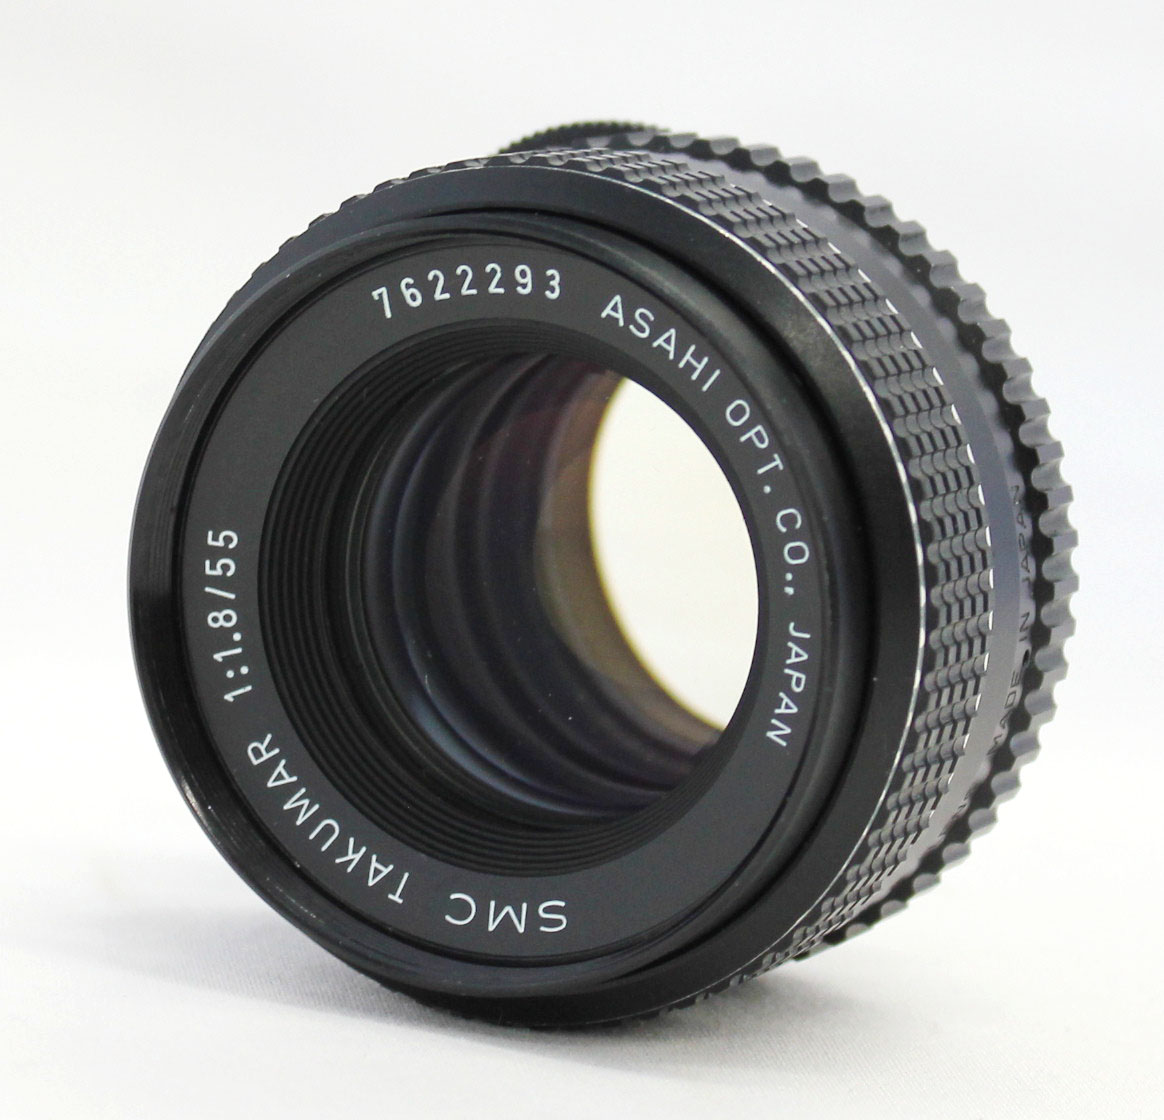 Asahi Pentax Spotmatic F SPF 35mm SLR Camera with SMC Takumar 55mm F/1.8 Lens and Case from Japan Photo 12